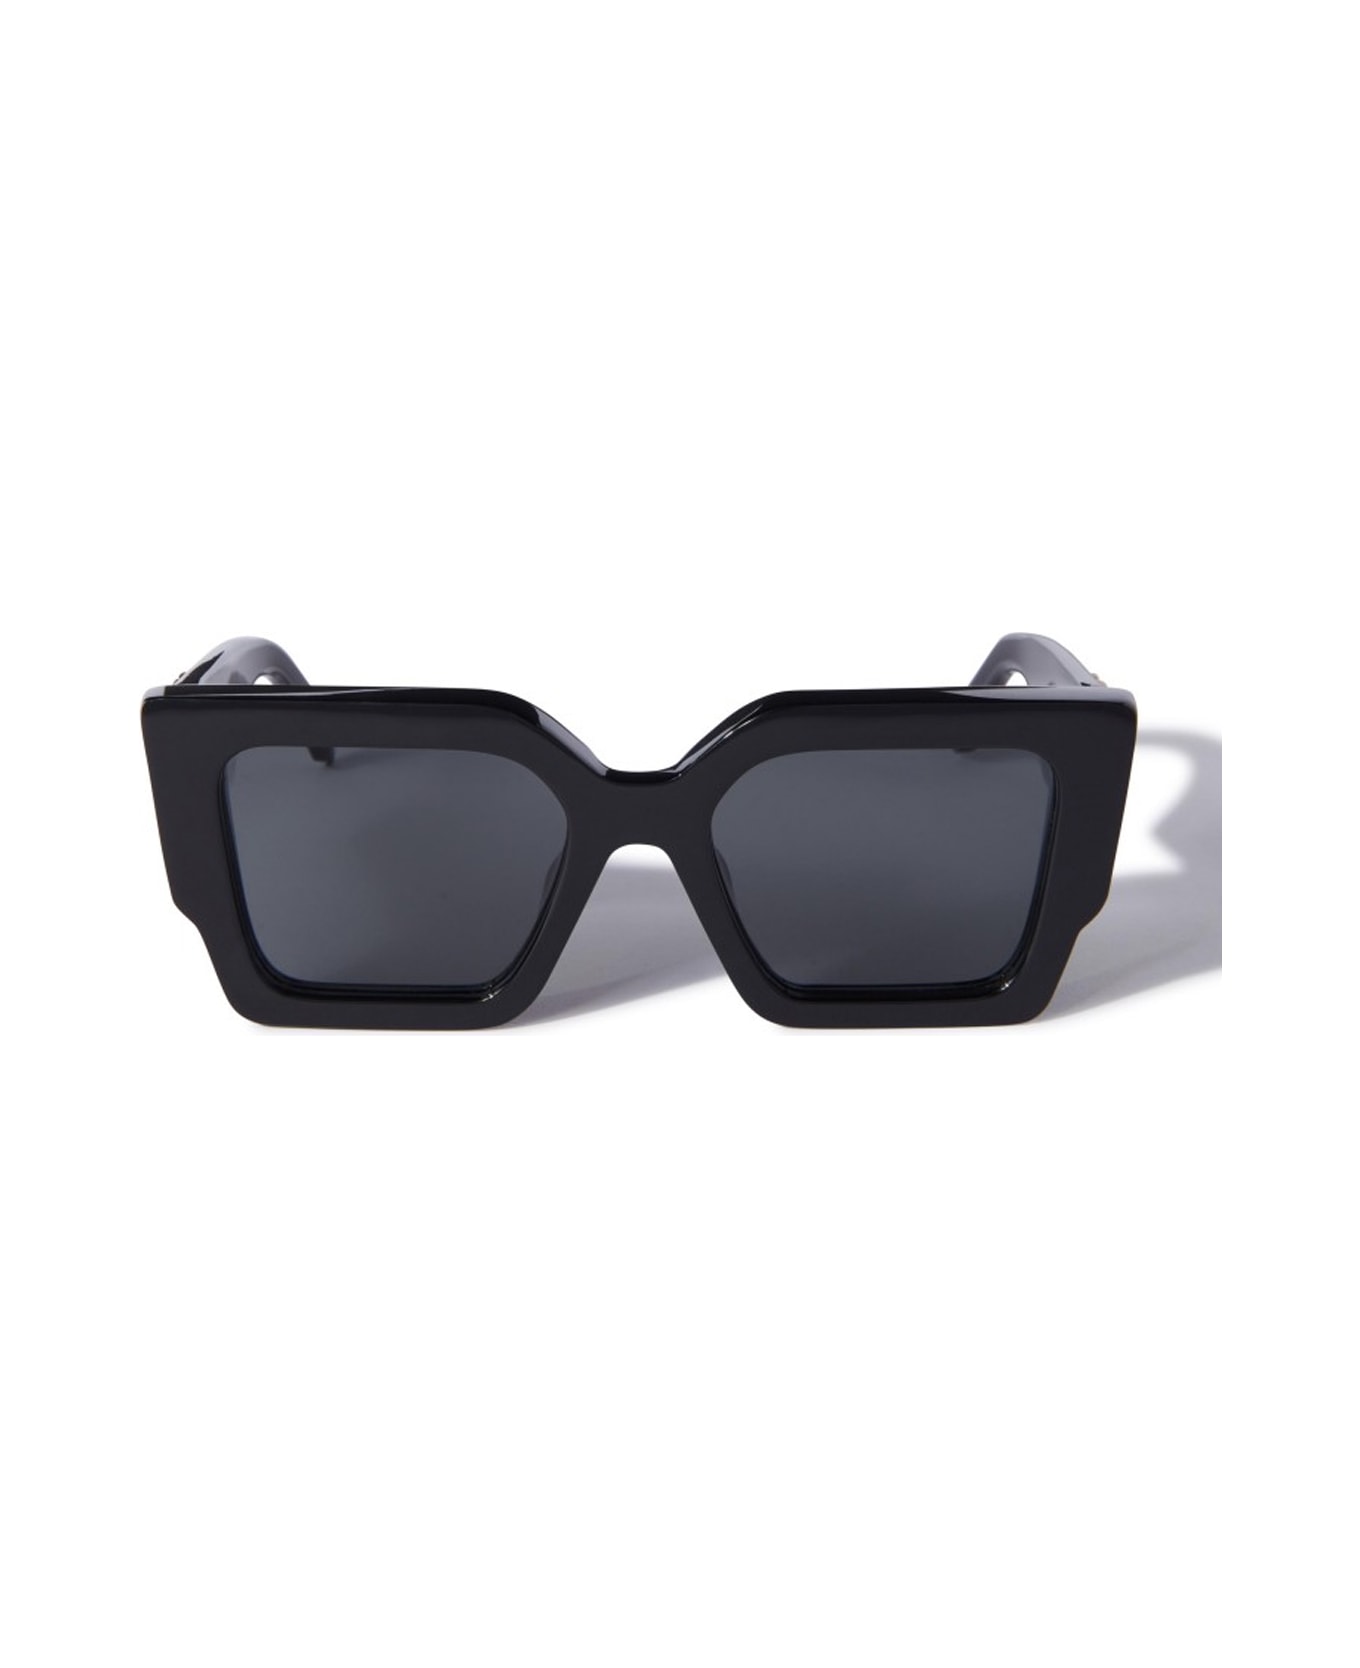 Off-White Oeri128 Catalina 1007 Black Sunglasses - Nero サングラス